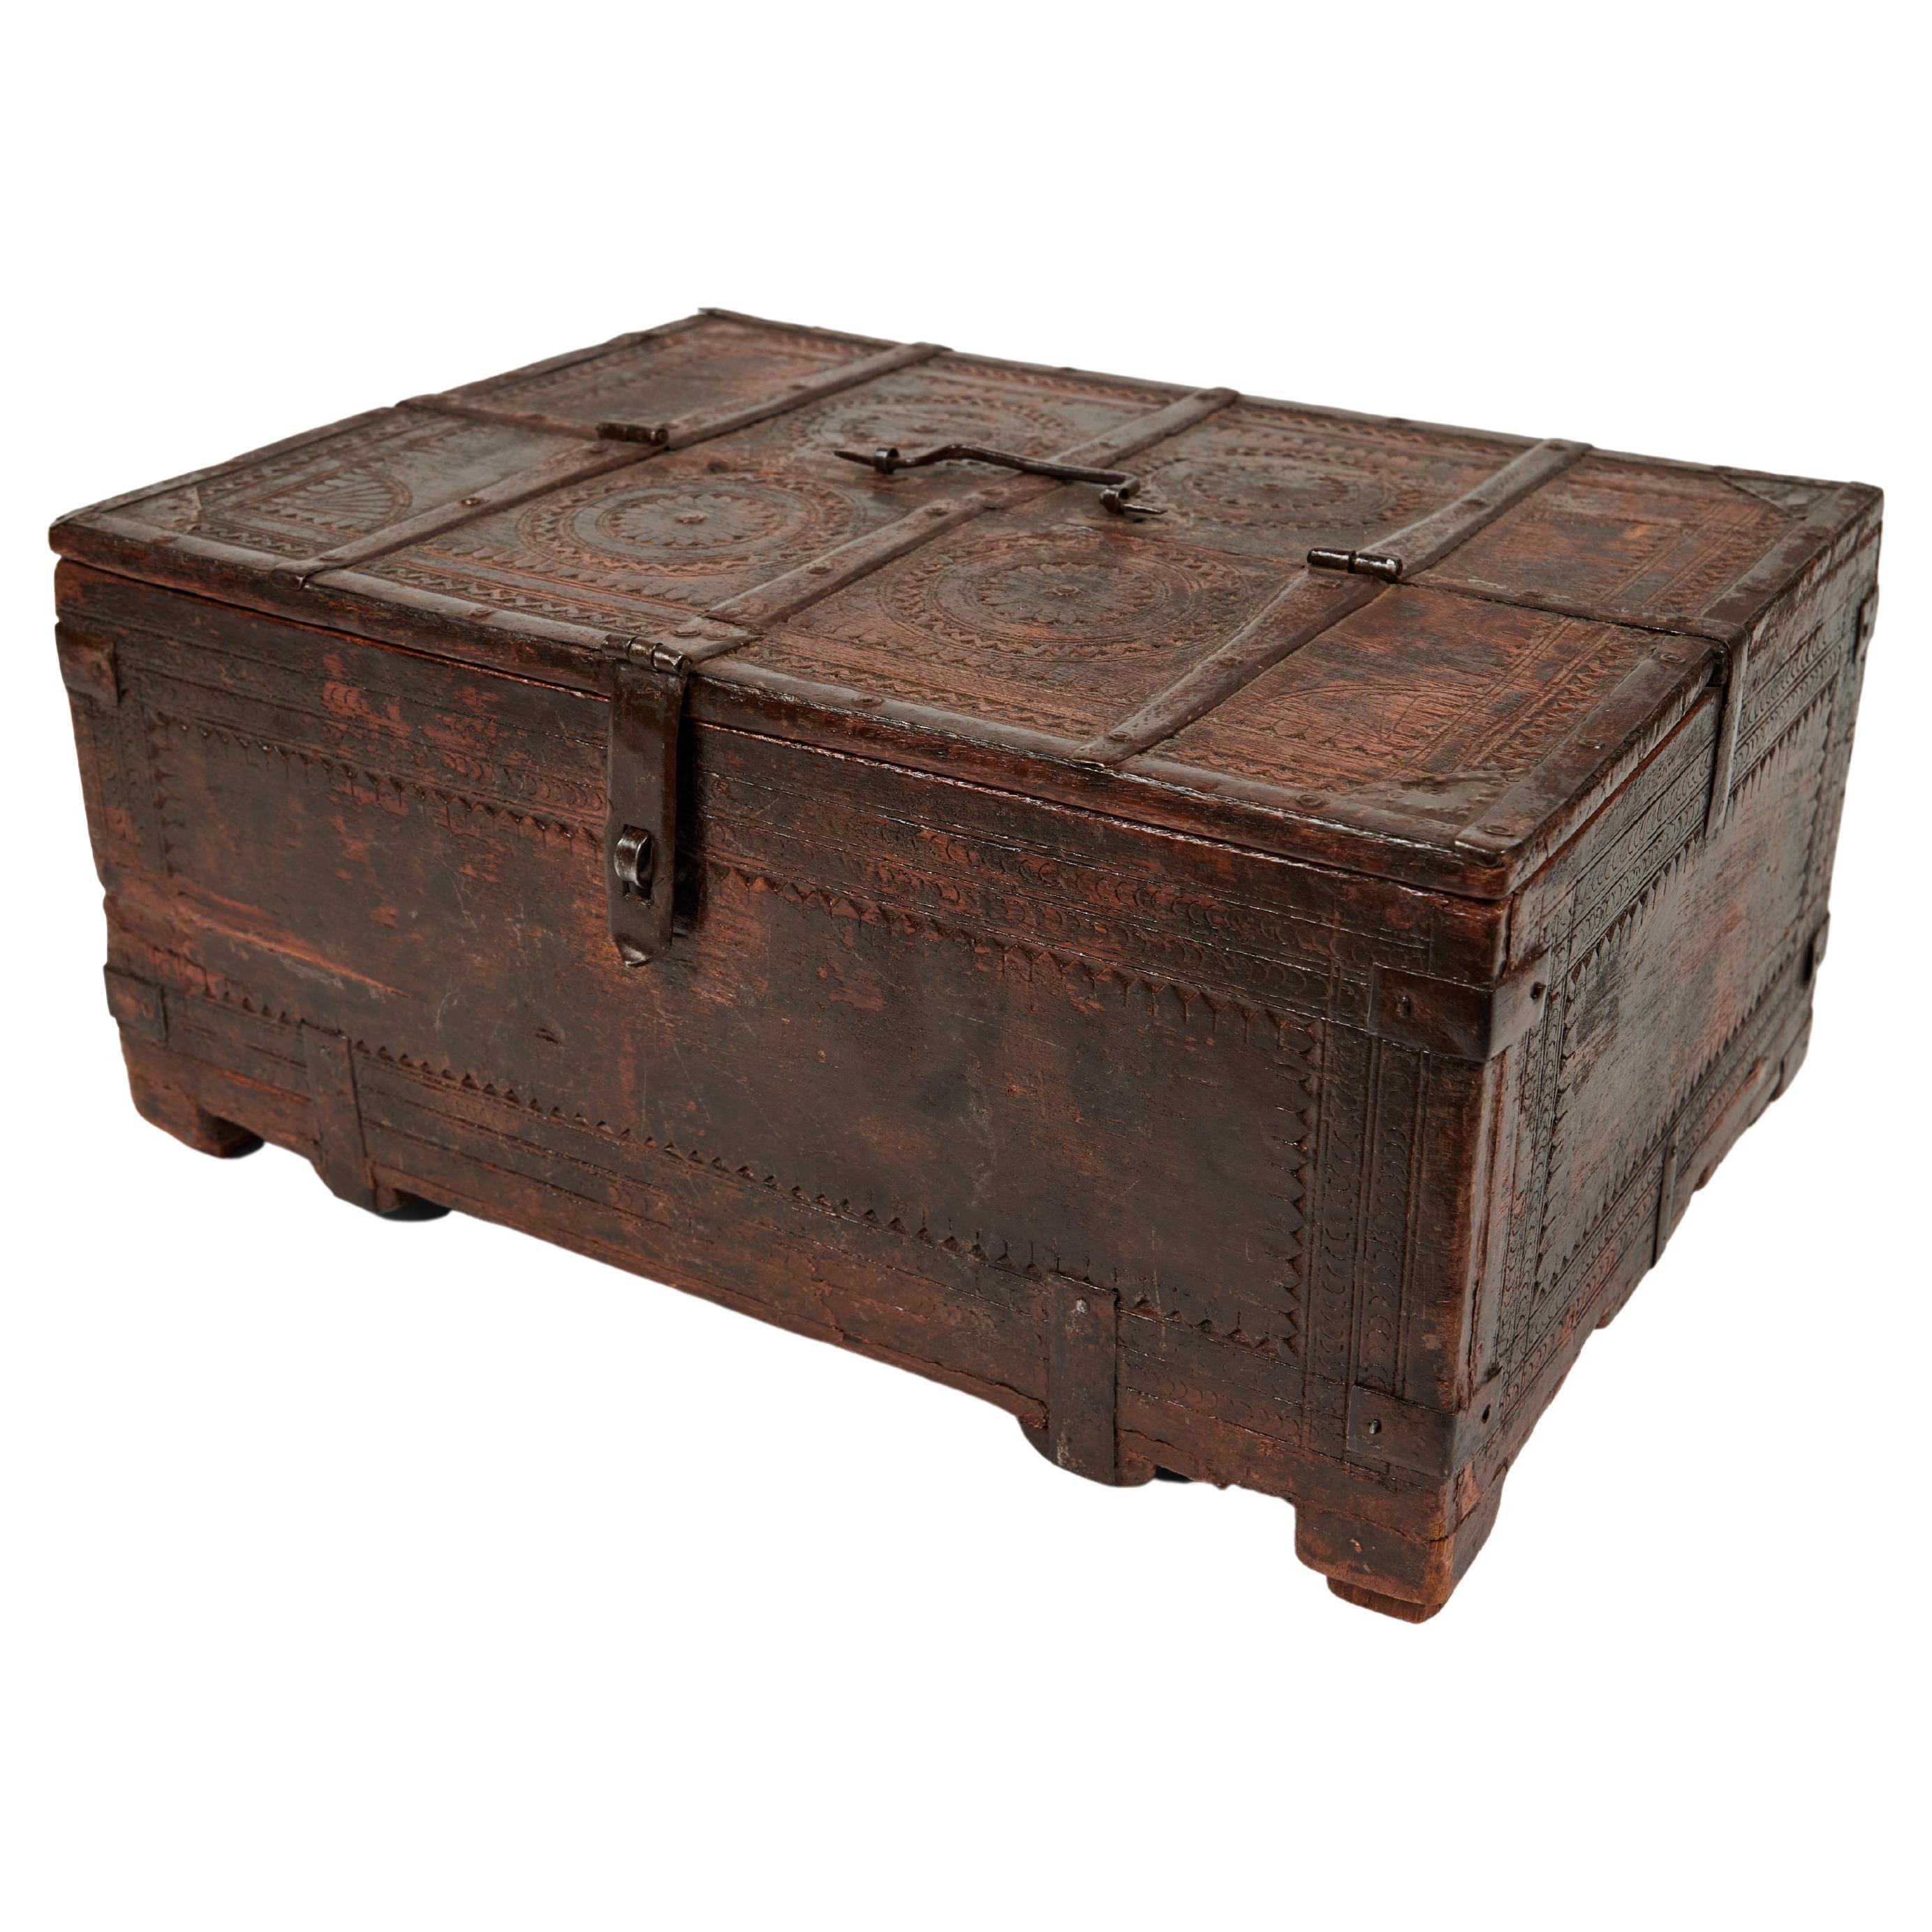 Antique Large Footed Wood Keepsake Box